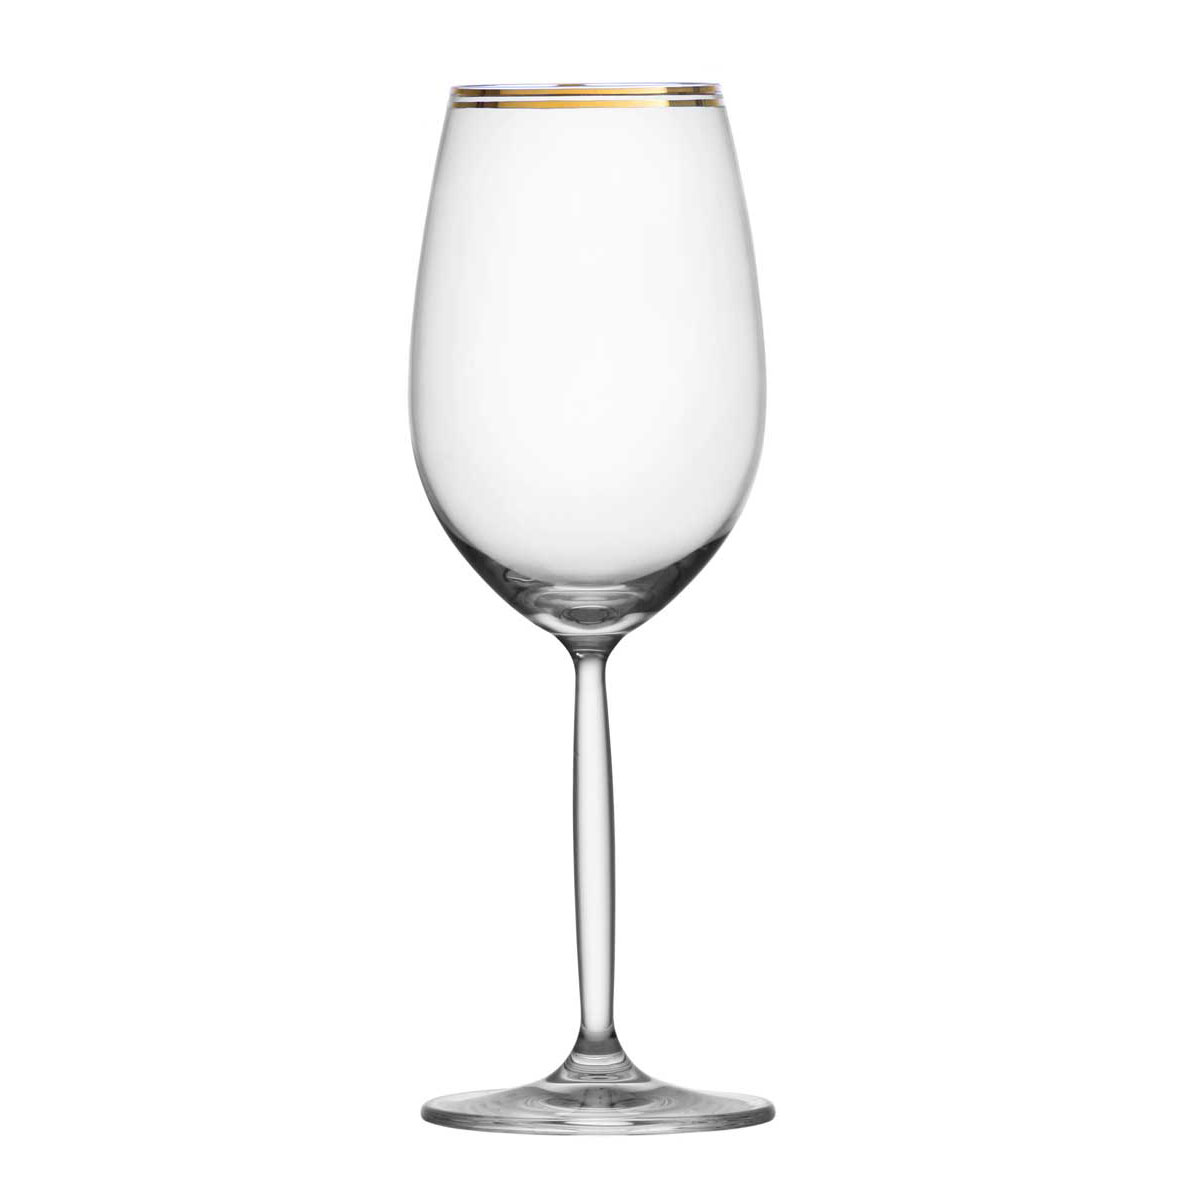 Schott Zwiesel Diva Living Wine Glass, Gold Band, Single